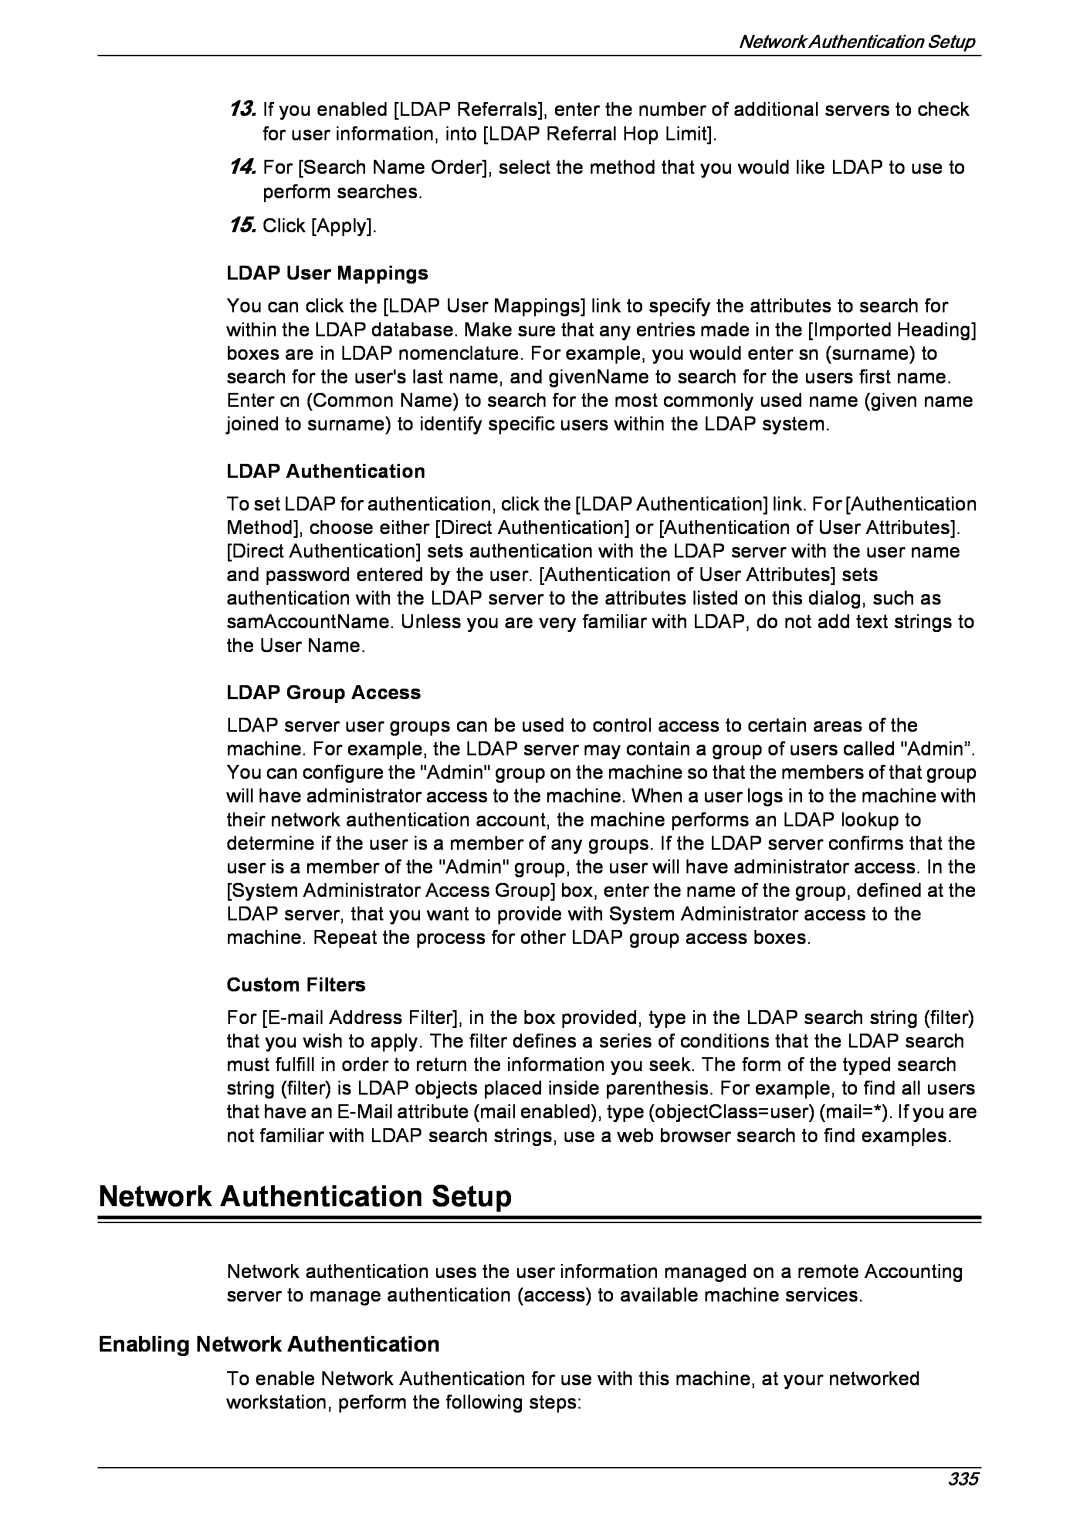 Xerox 5222 manual Network Authentication Setup, LDAP User Mappings, LDAP Authentication, LDAP Group Access, Custom Filters 